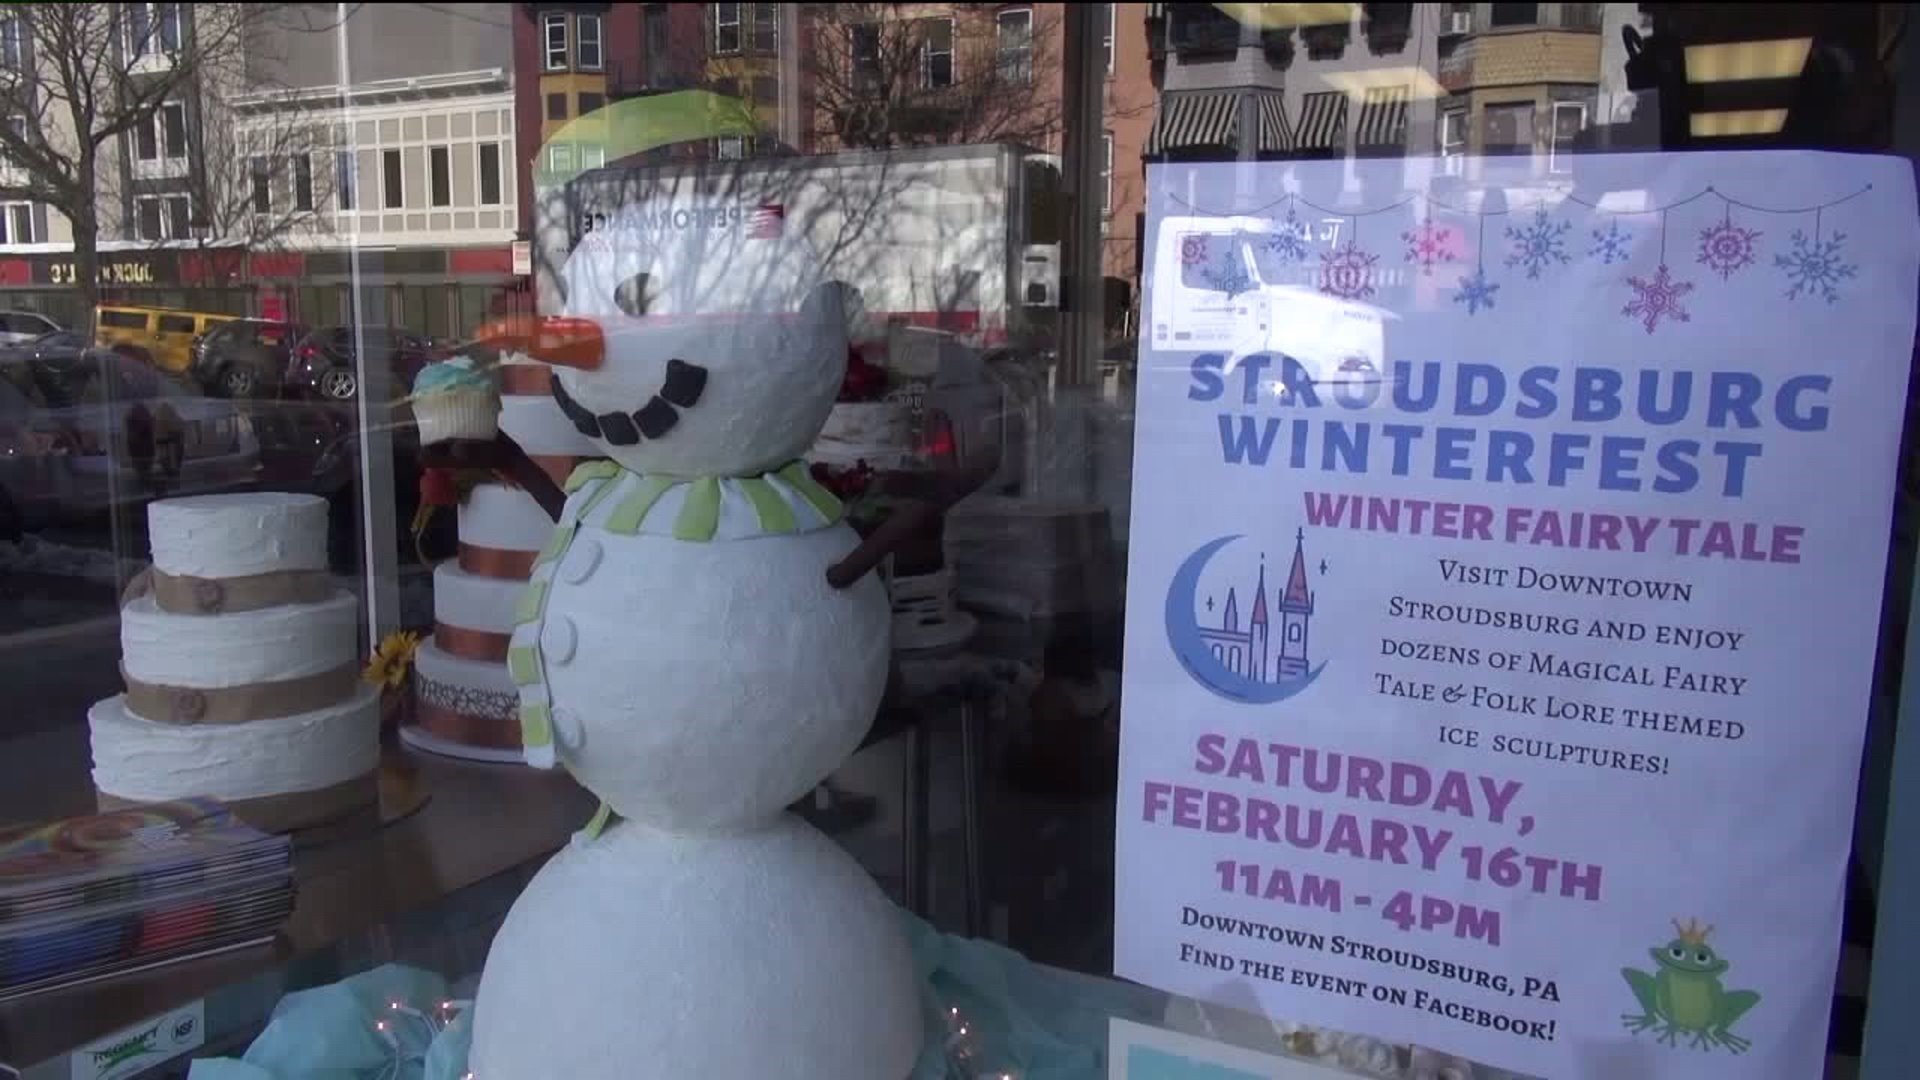 Fairytale-themed Winter Festival Planned in Stroudsburg